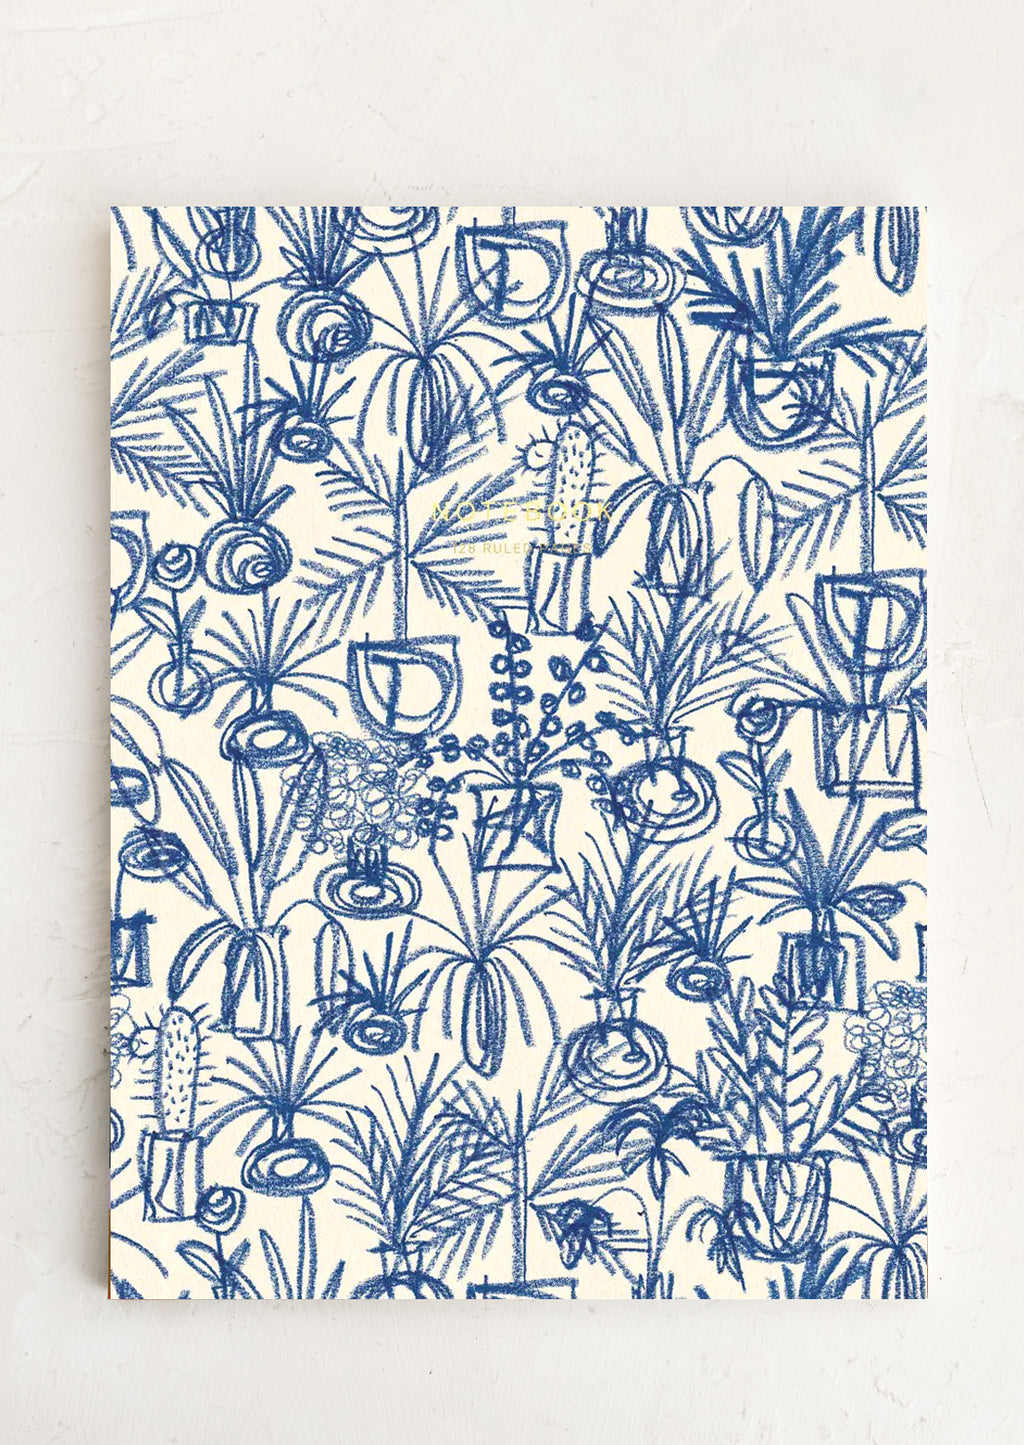 Houseplants: A notebook with sketchy blue houseplants pattern.